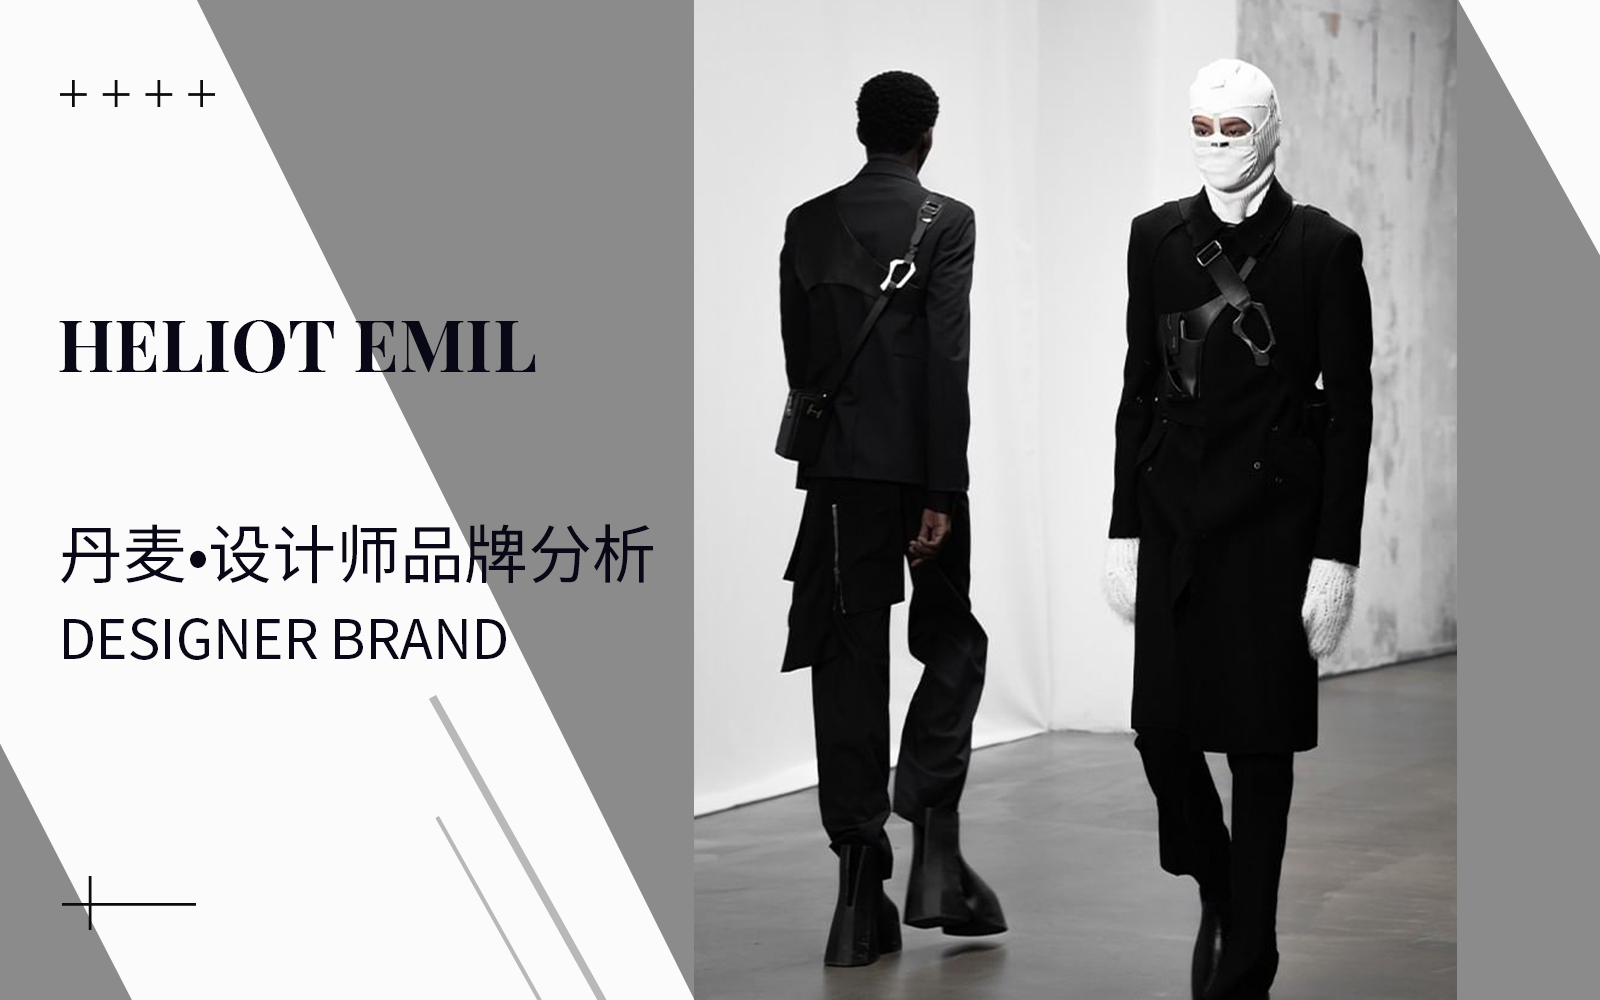 Uniform Reconstruction -- The Analysis of Heliot Emil The Menswear Designer Brand